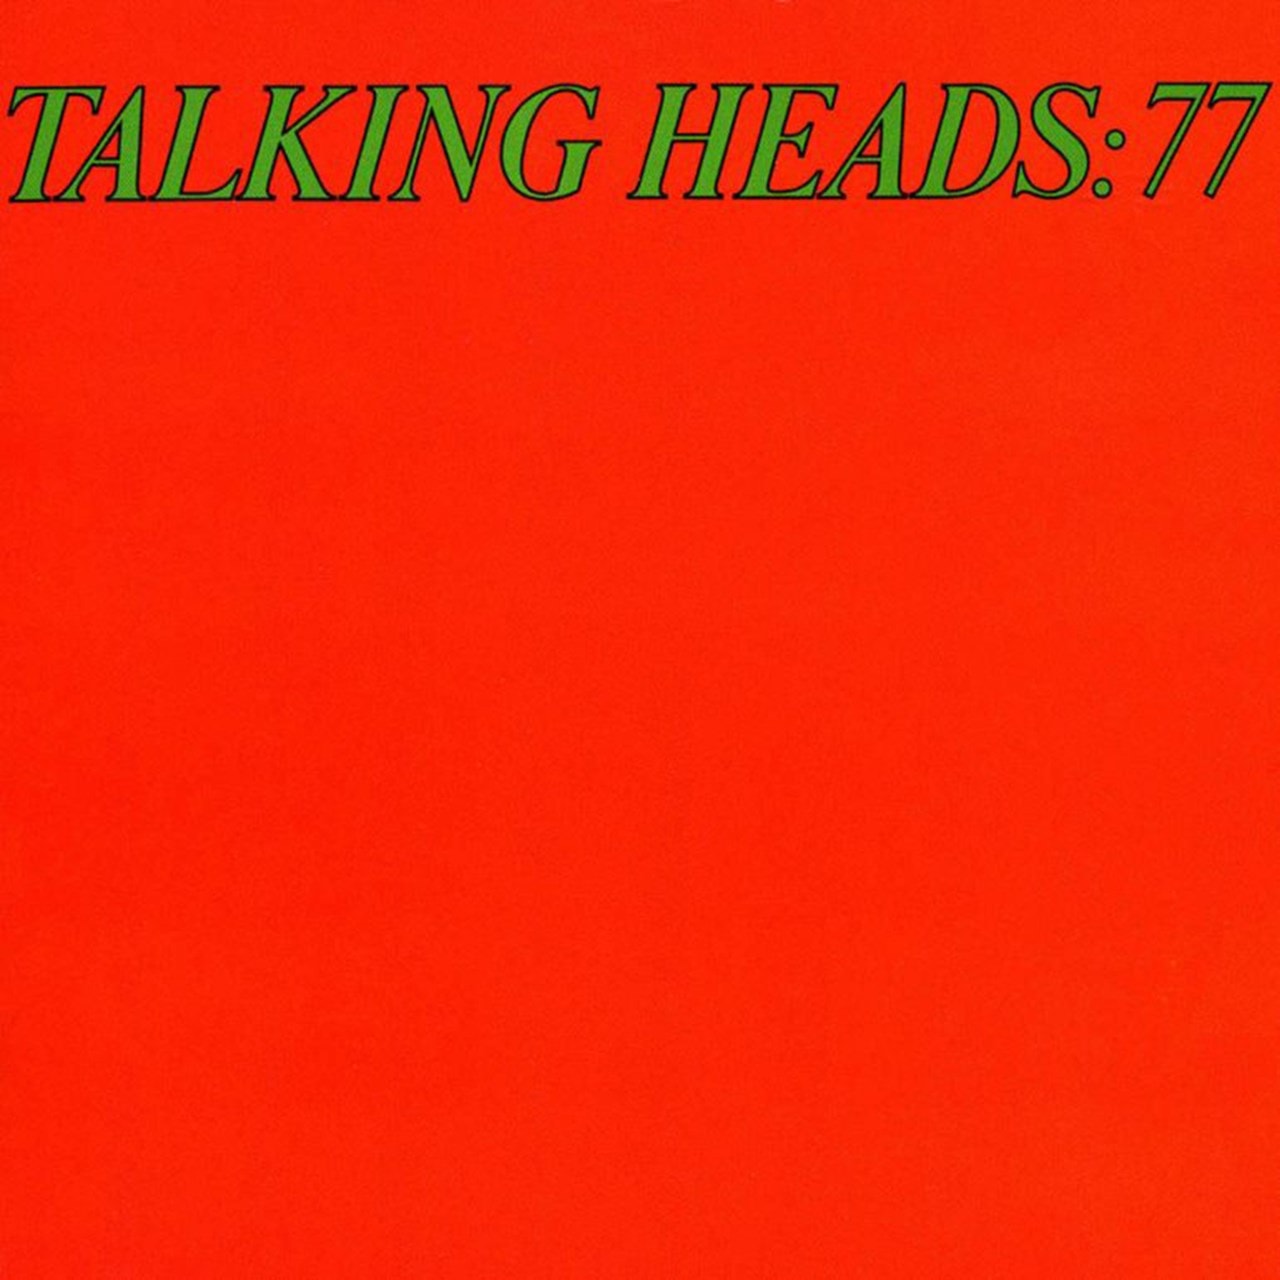 Talking Heads 77 Vinyl 12 Album Free Shipping Over £20 Hmv Store